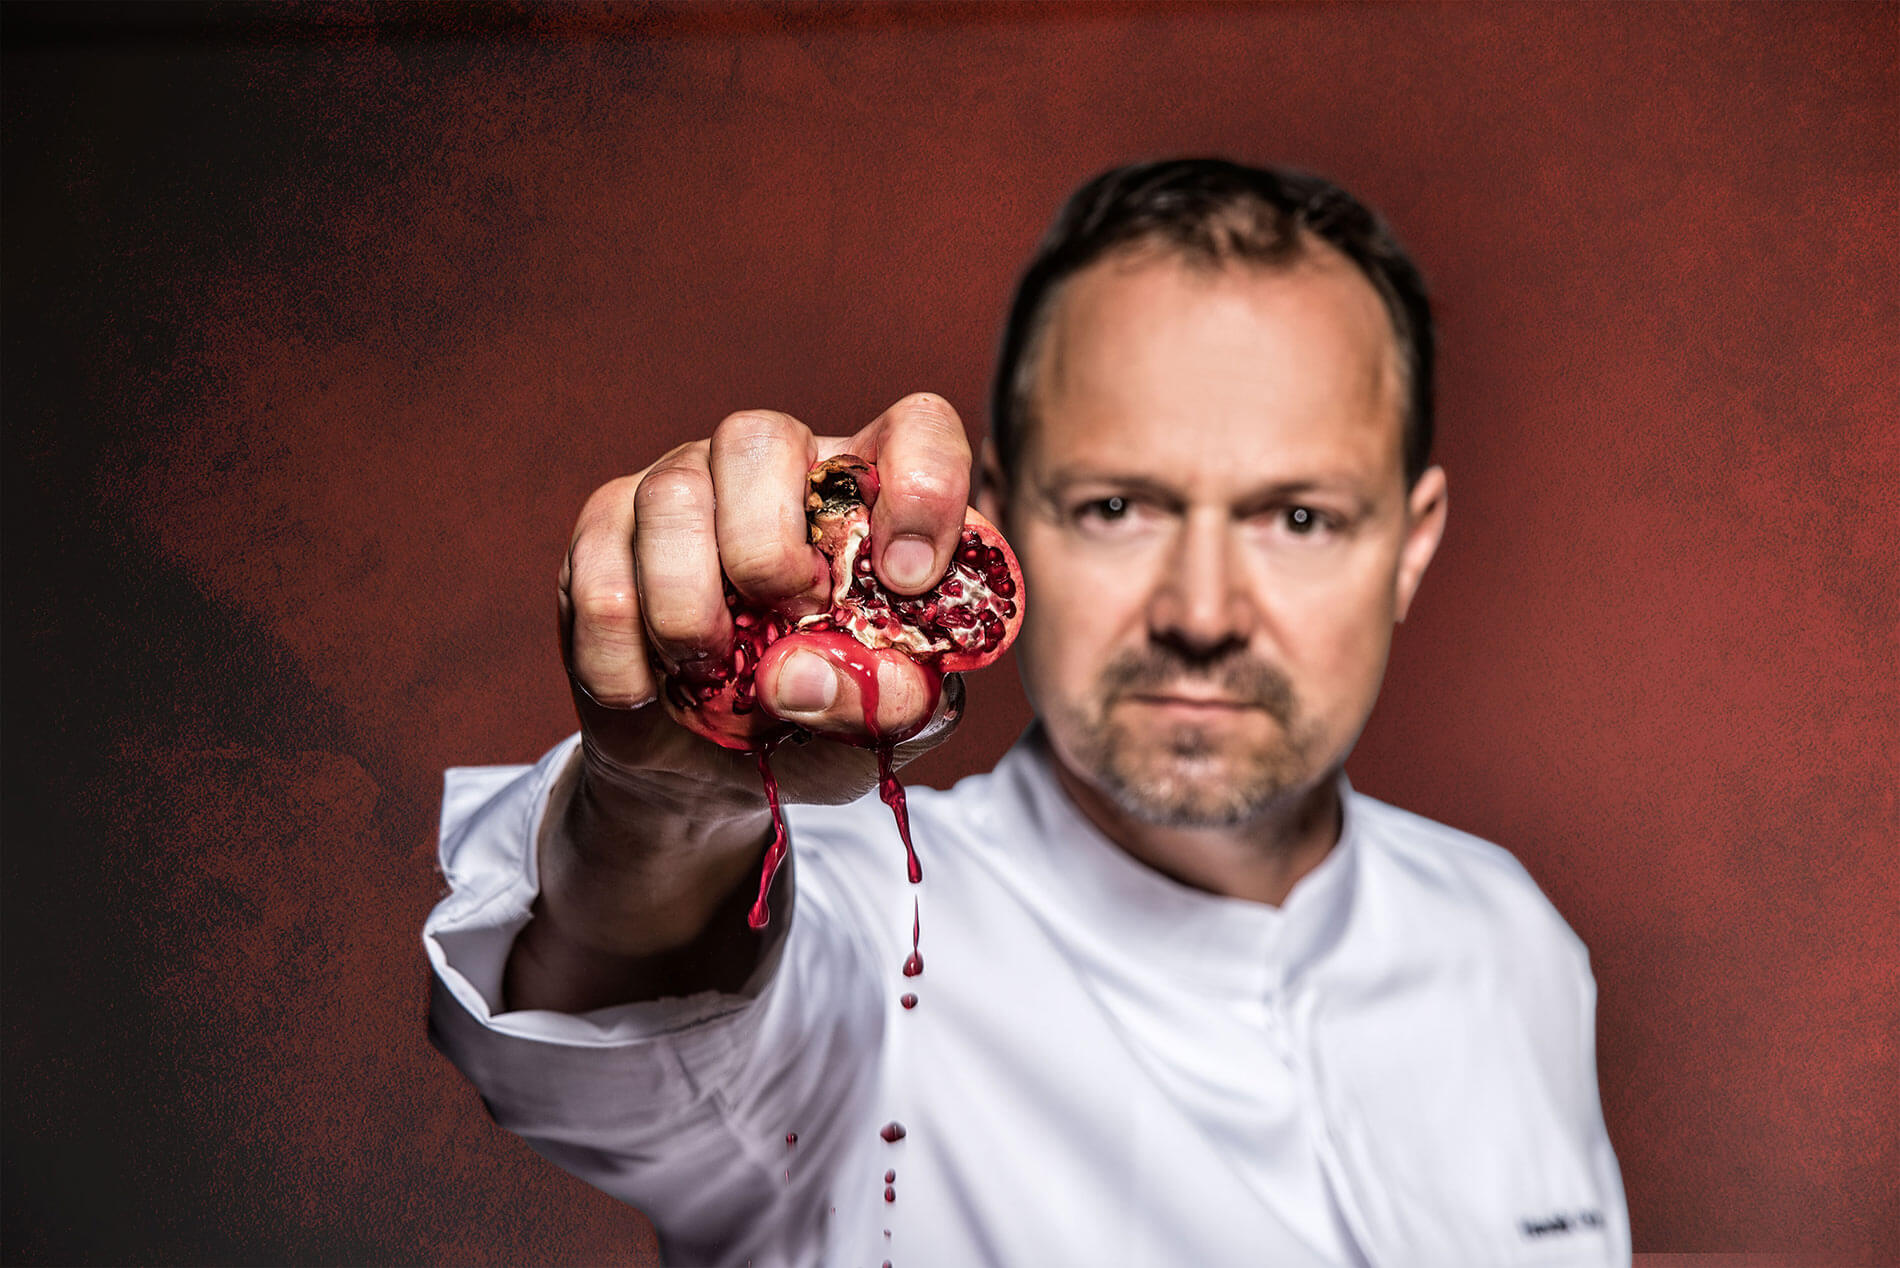 Top chef Hendrik Otto - expresses pomegranateRolling Pin